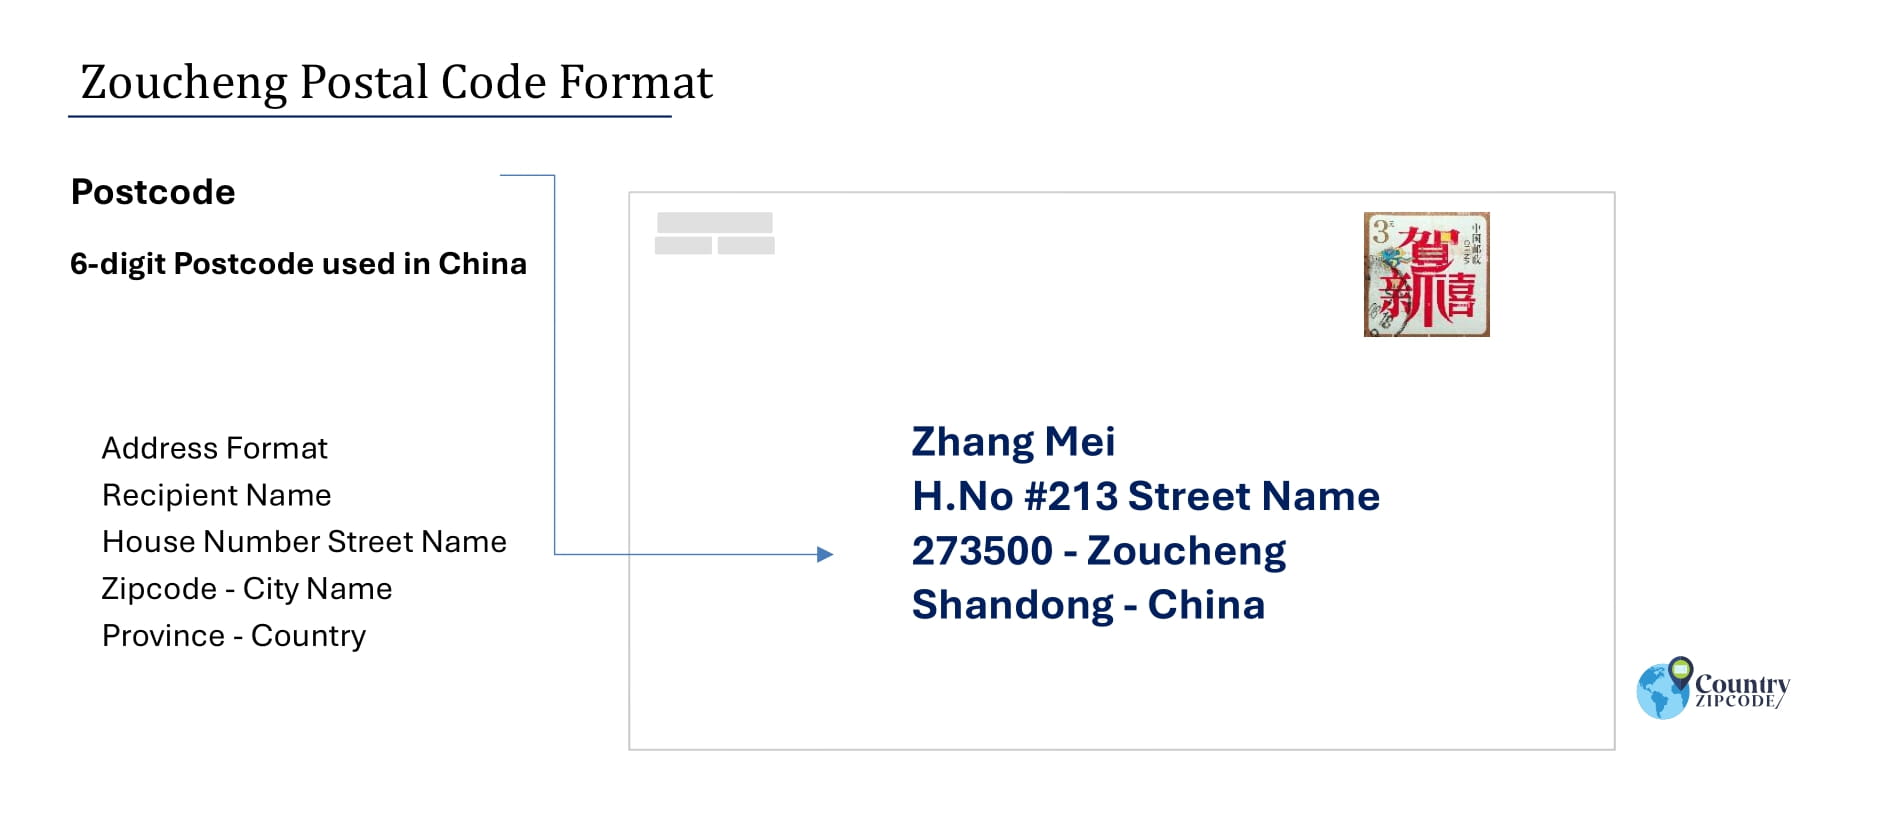 Example of ZouchengChinaPostalcodeandAddressformat